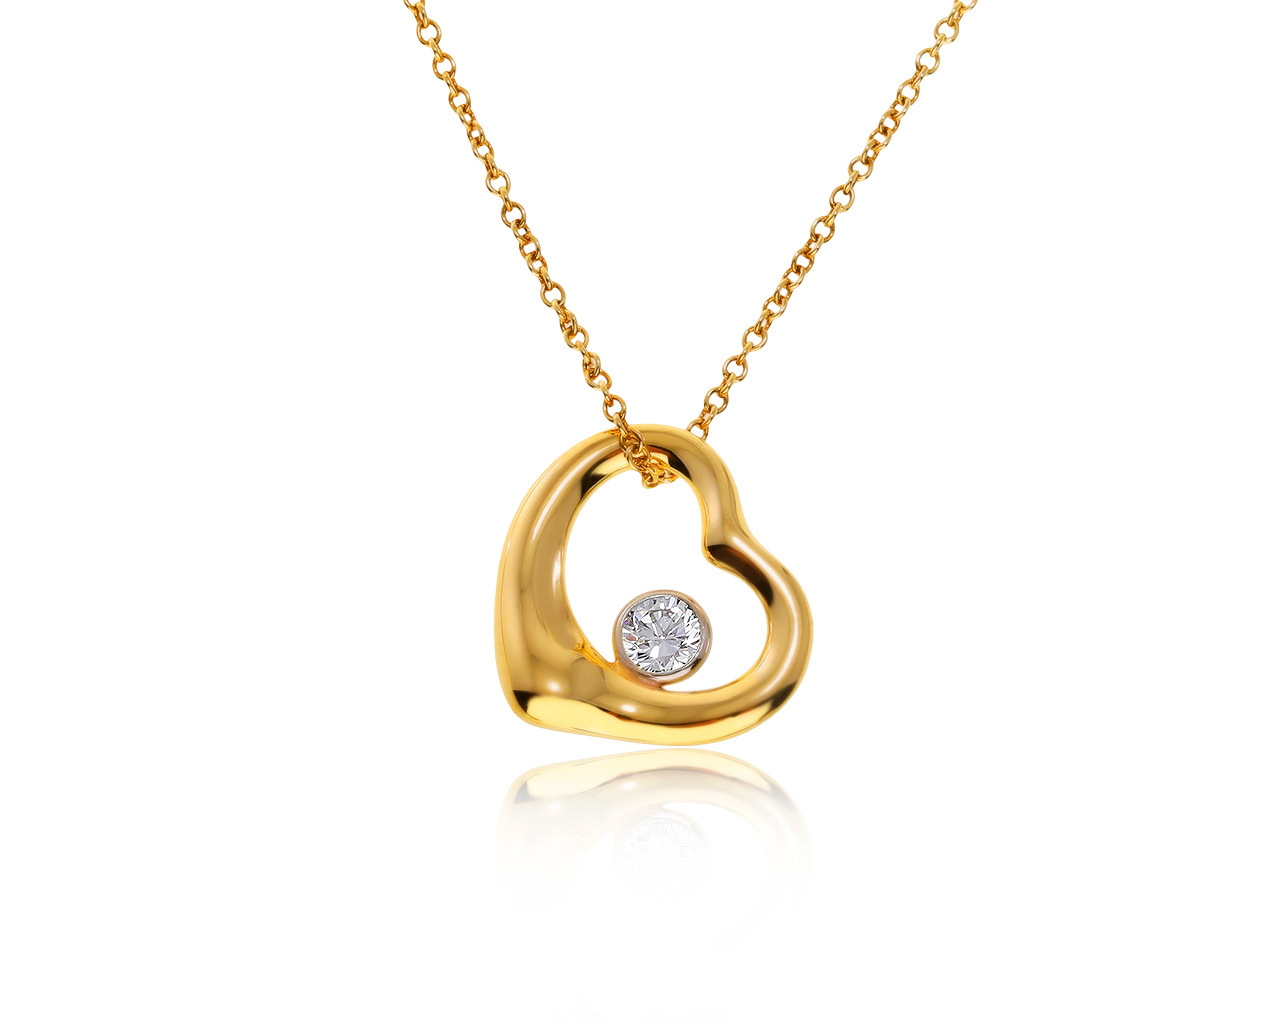 Оригинальный золотой кулон с бриллиантами 0.25ct Tiffany&Co Elsa Peretti 021220/5